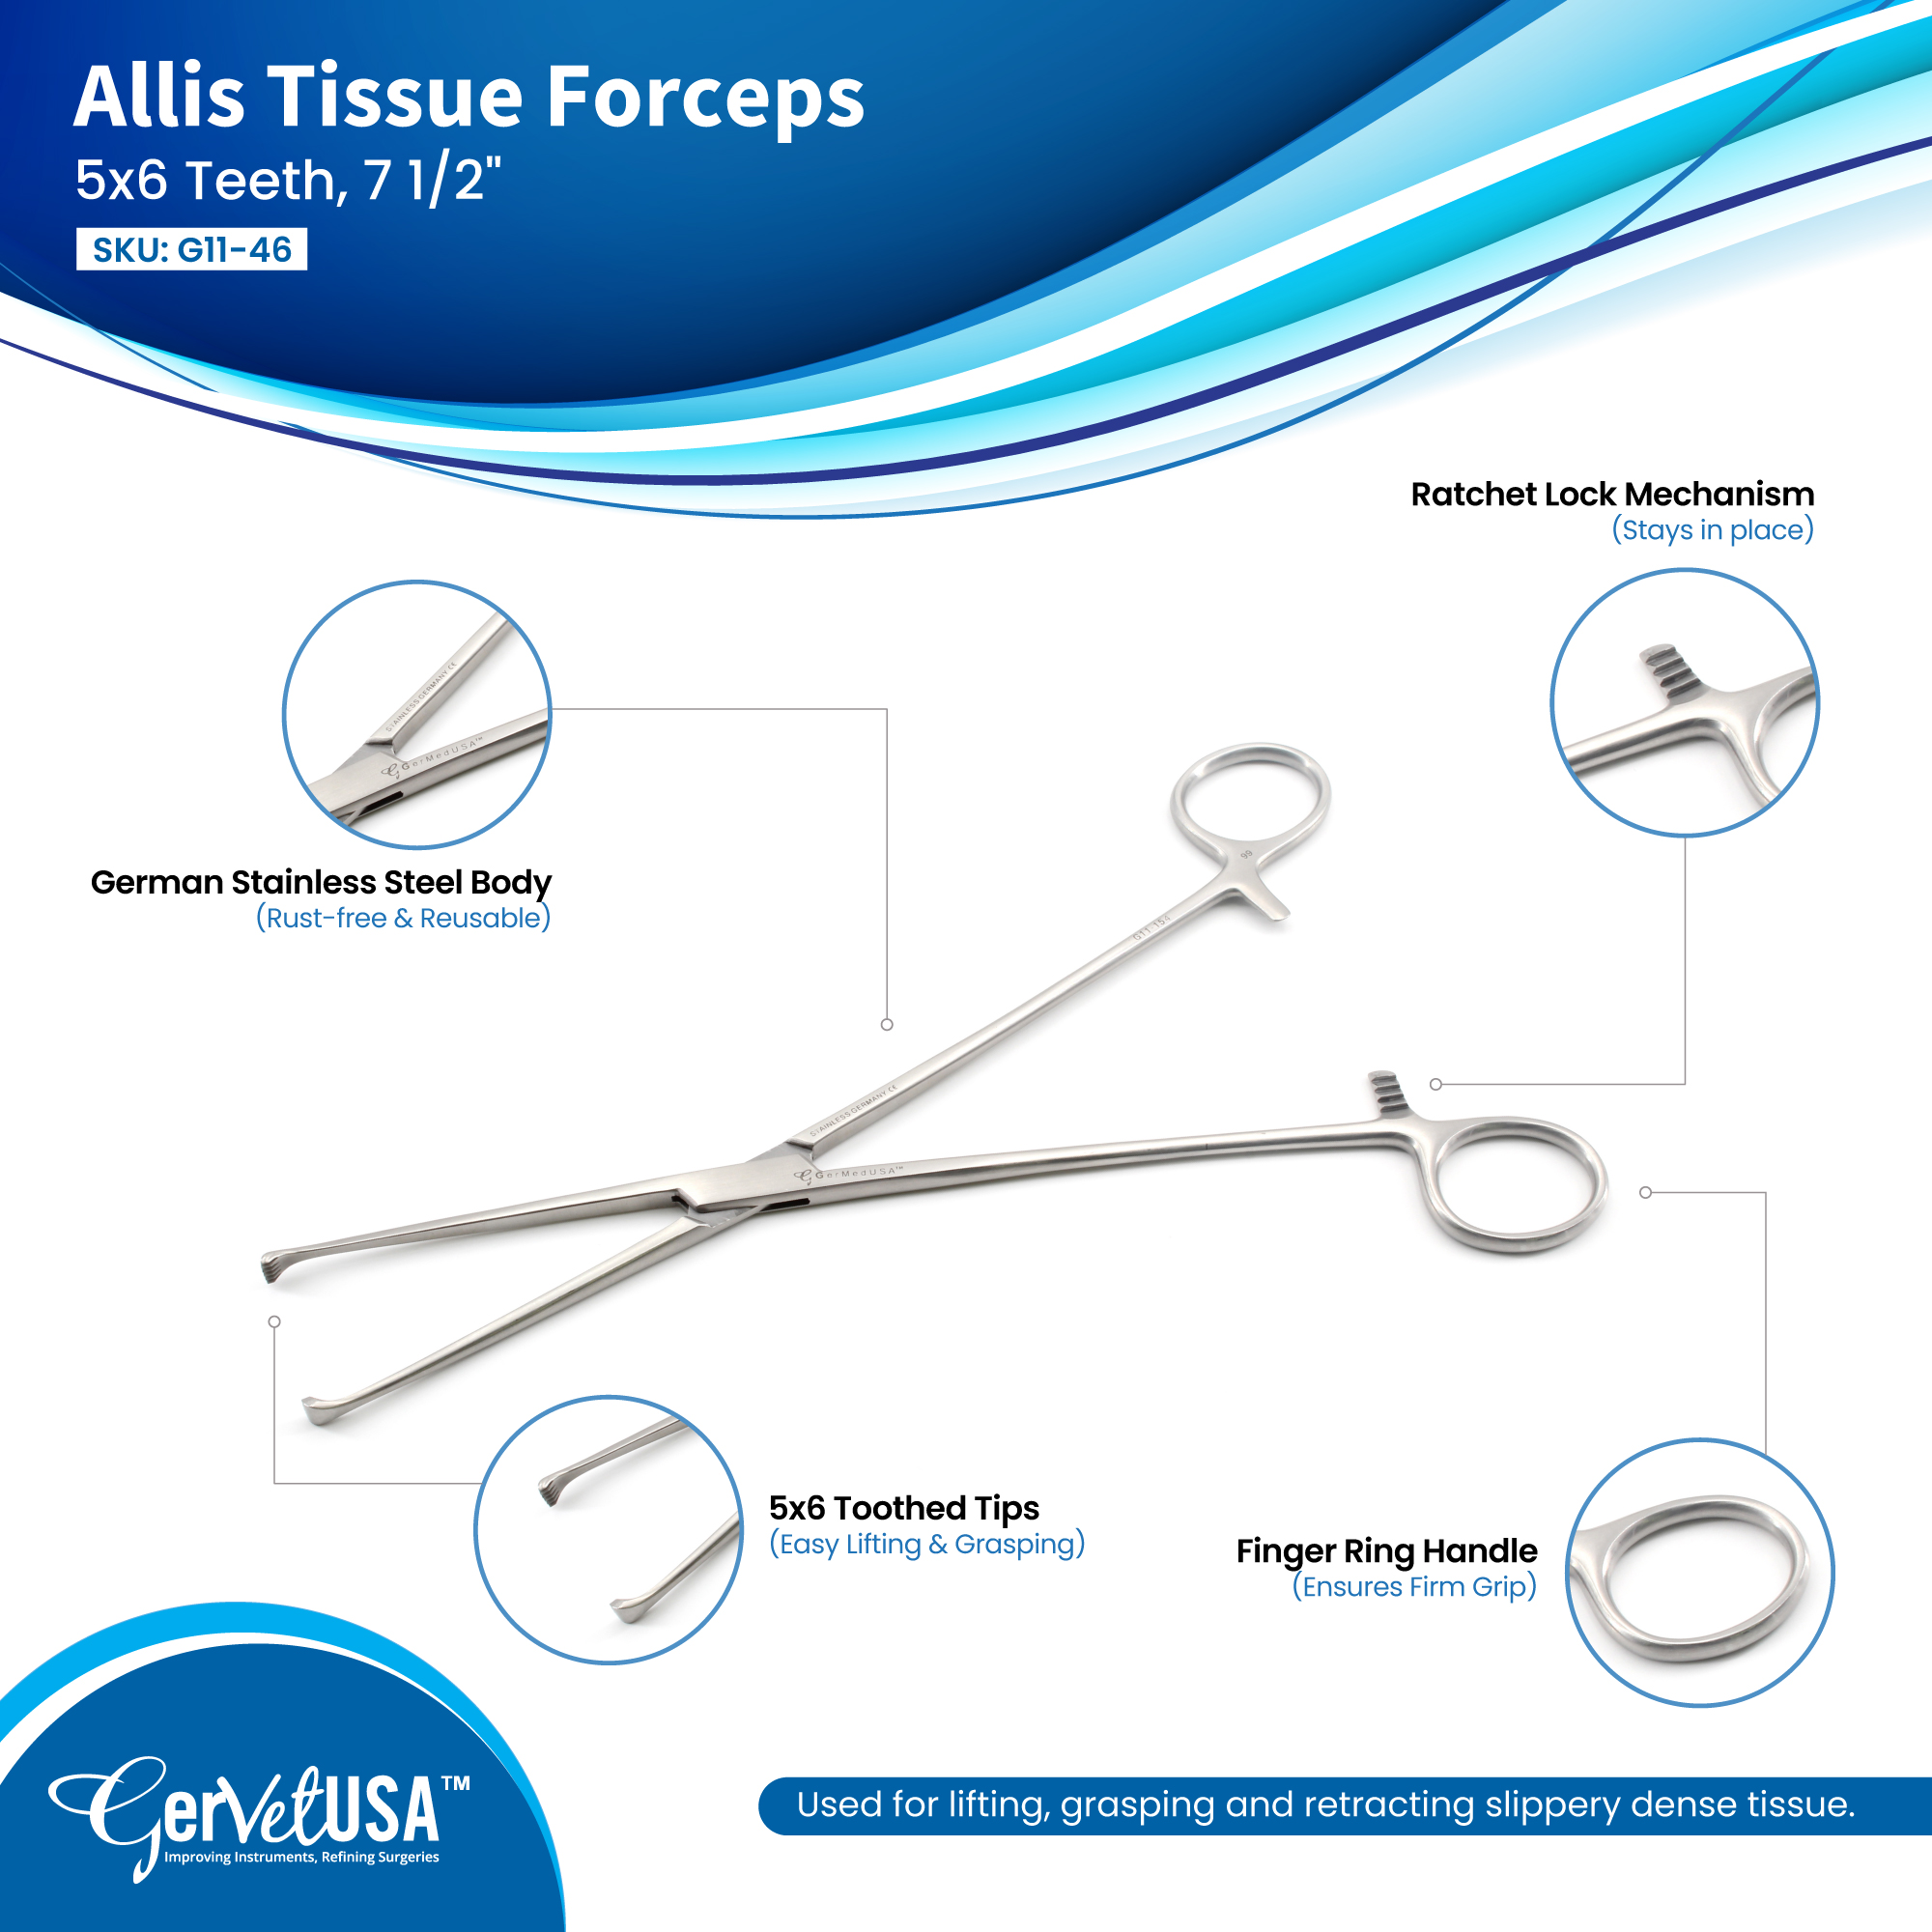 Allis Tissue Forceps 5x6 Teeth, 7 1/2"